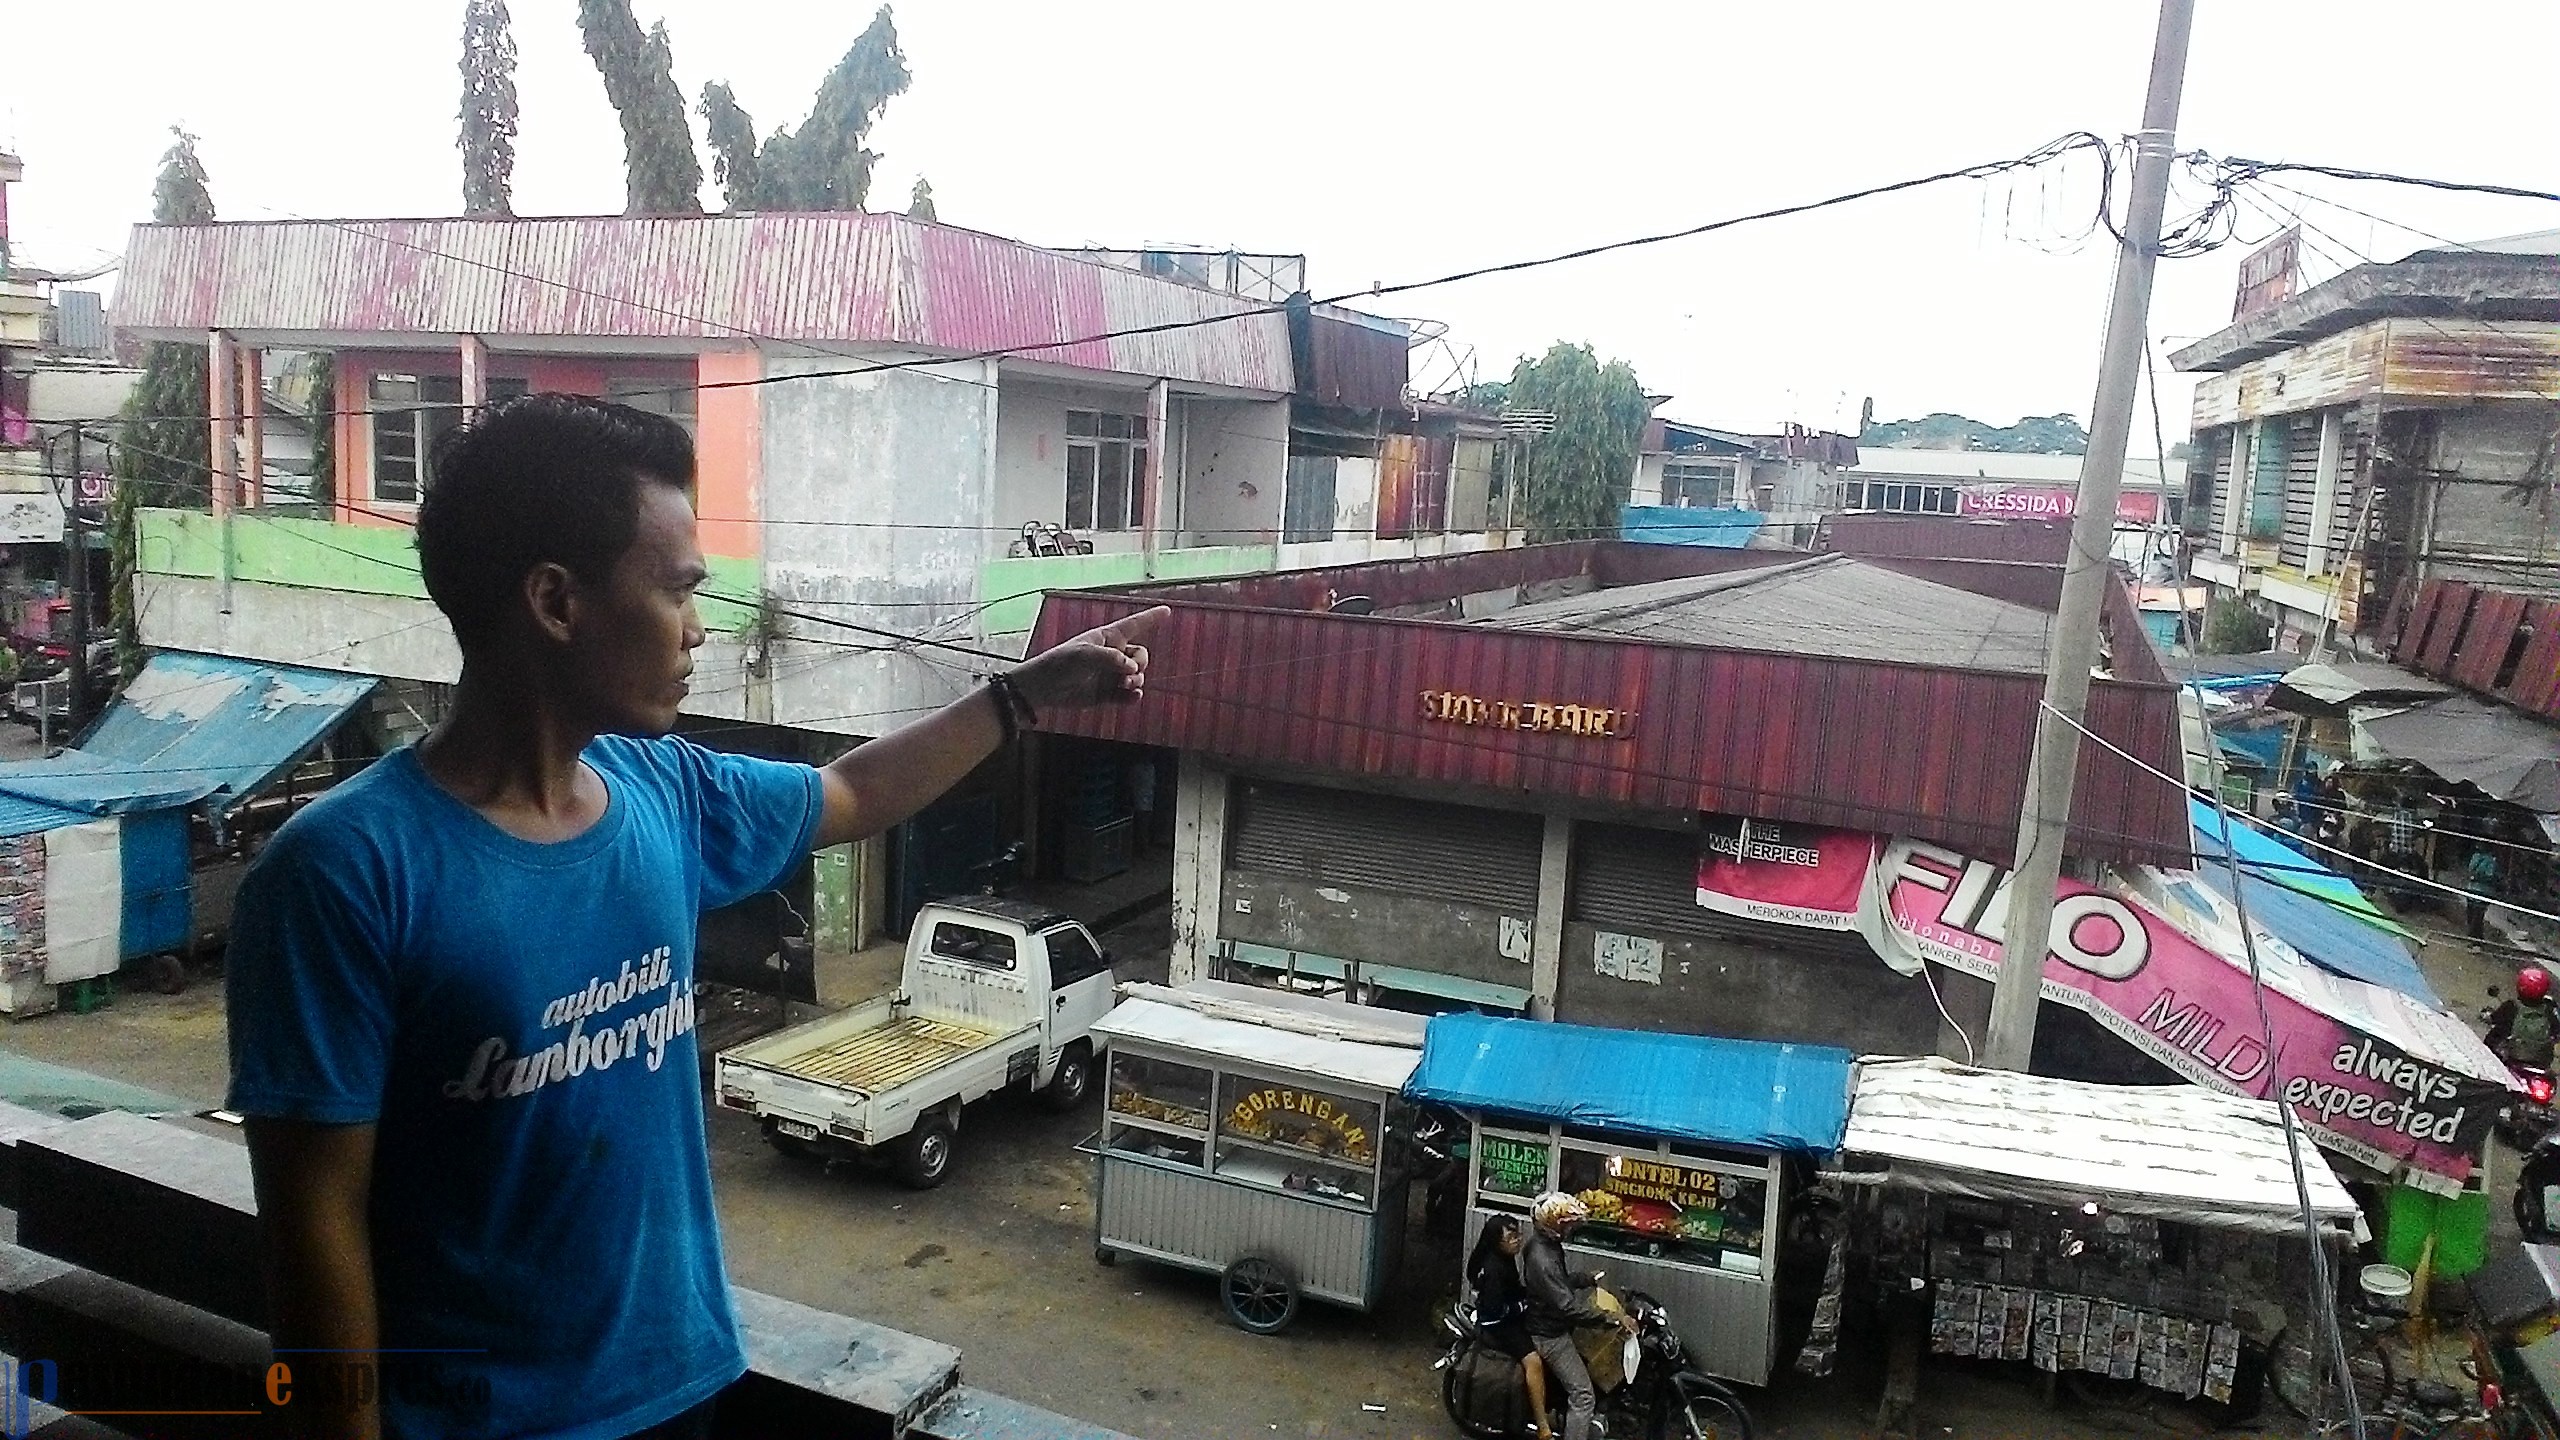 Pedagang Segera dipindahkan, Mall Pujasera Awal Tahun Dibangun